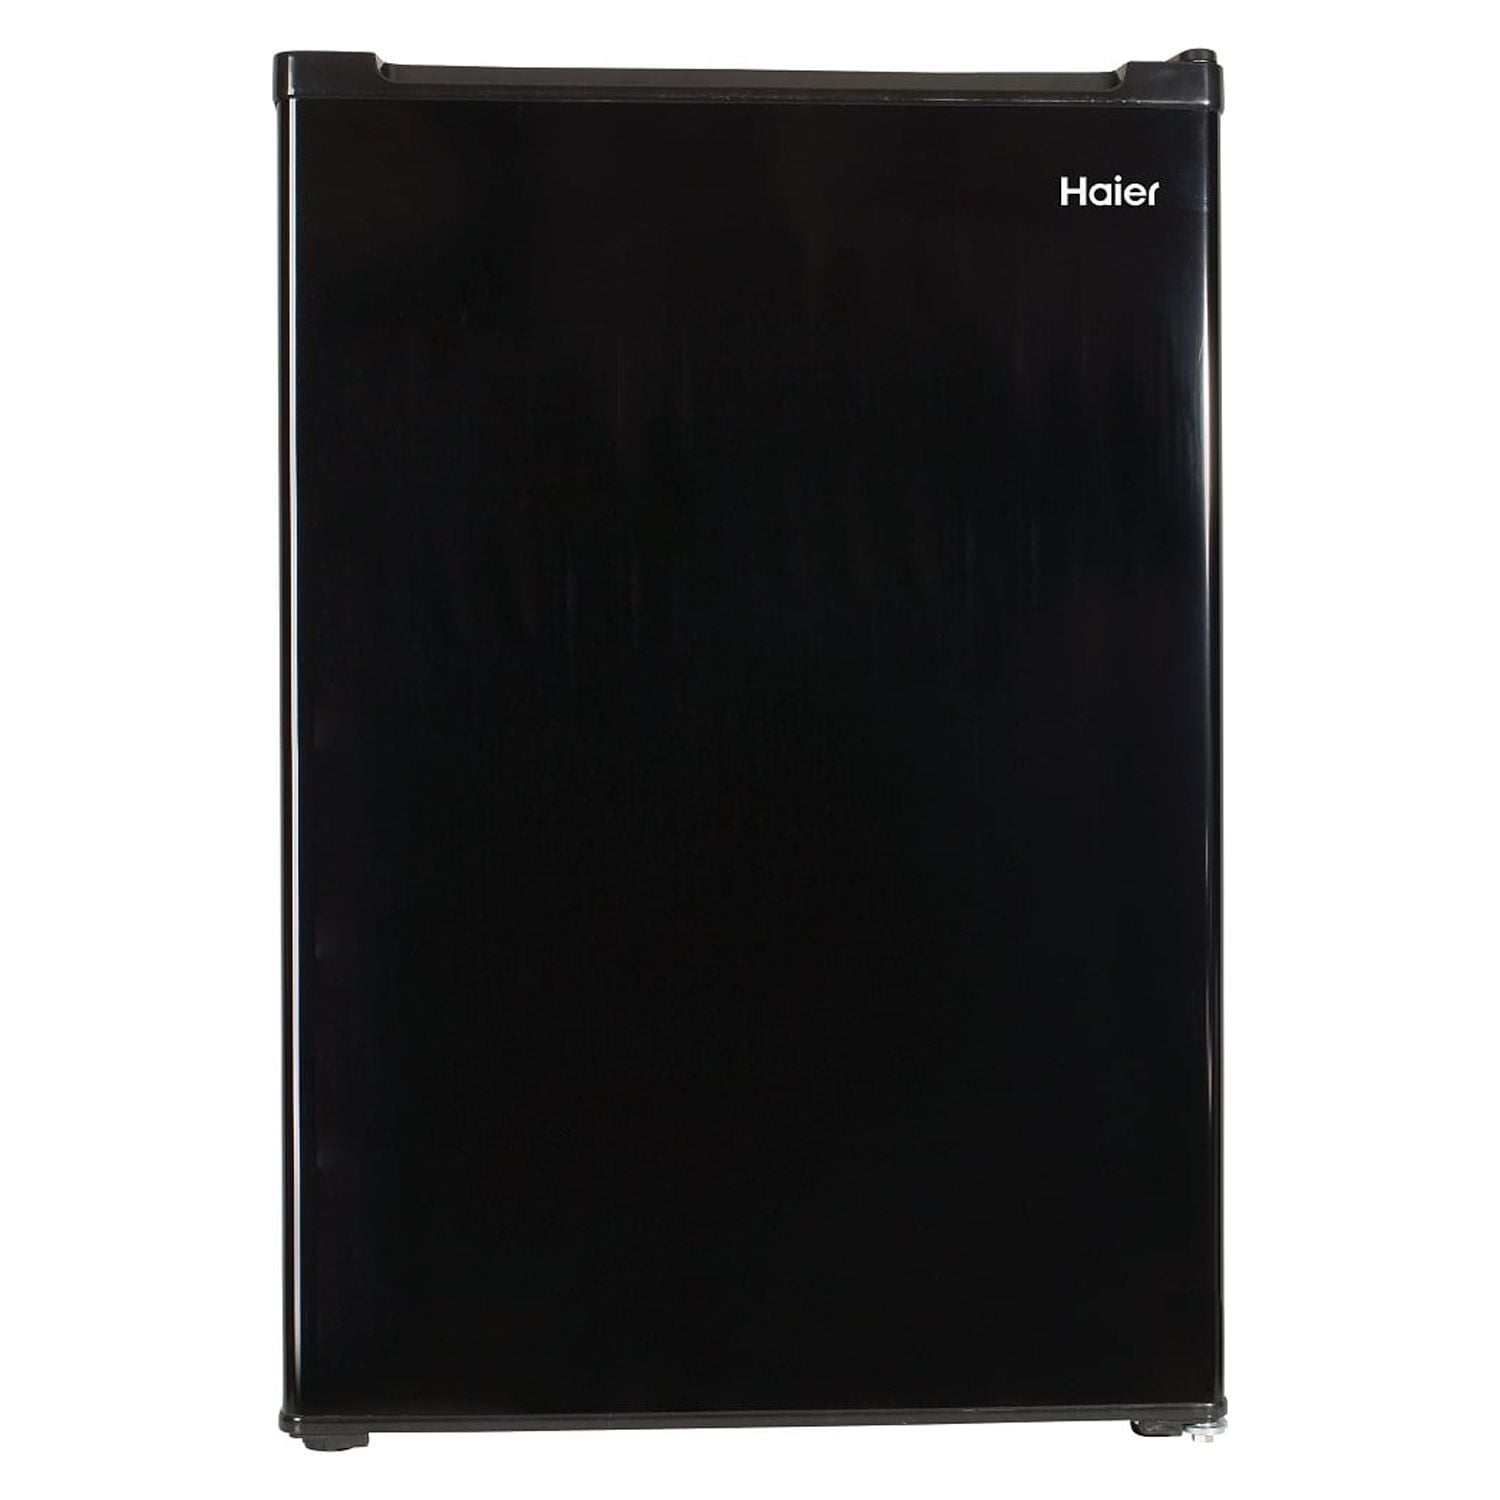 Haier 3.3 Cu. Ft. Black Compact Refrigerator